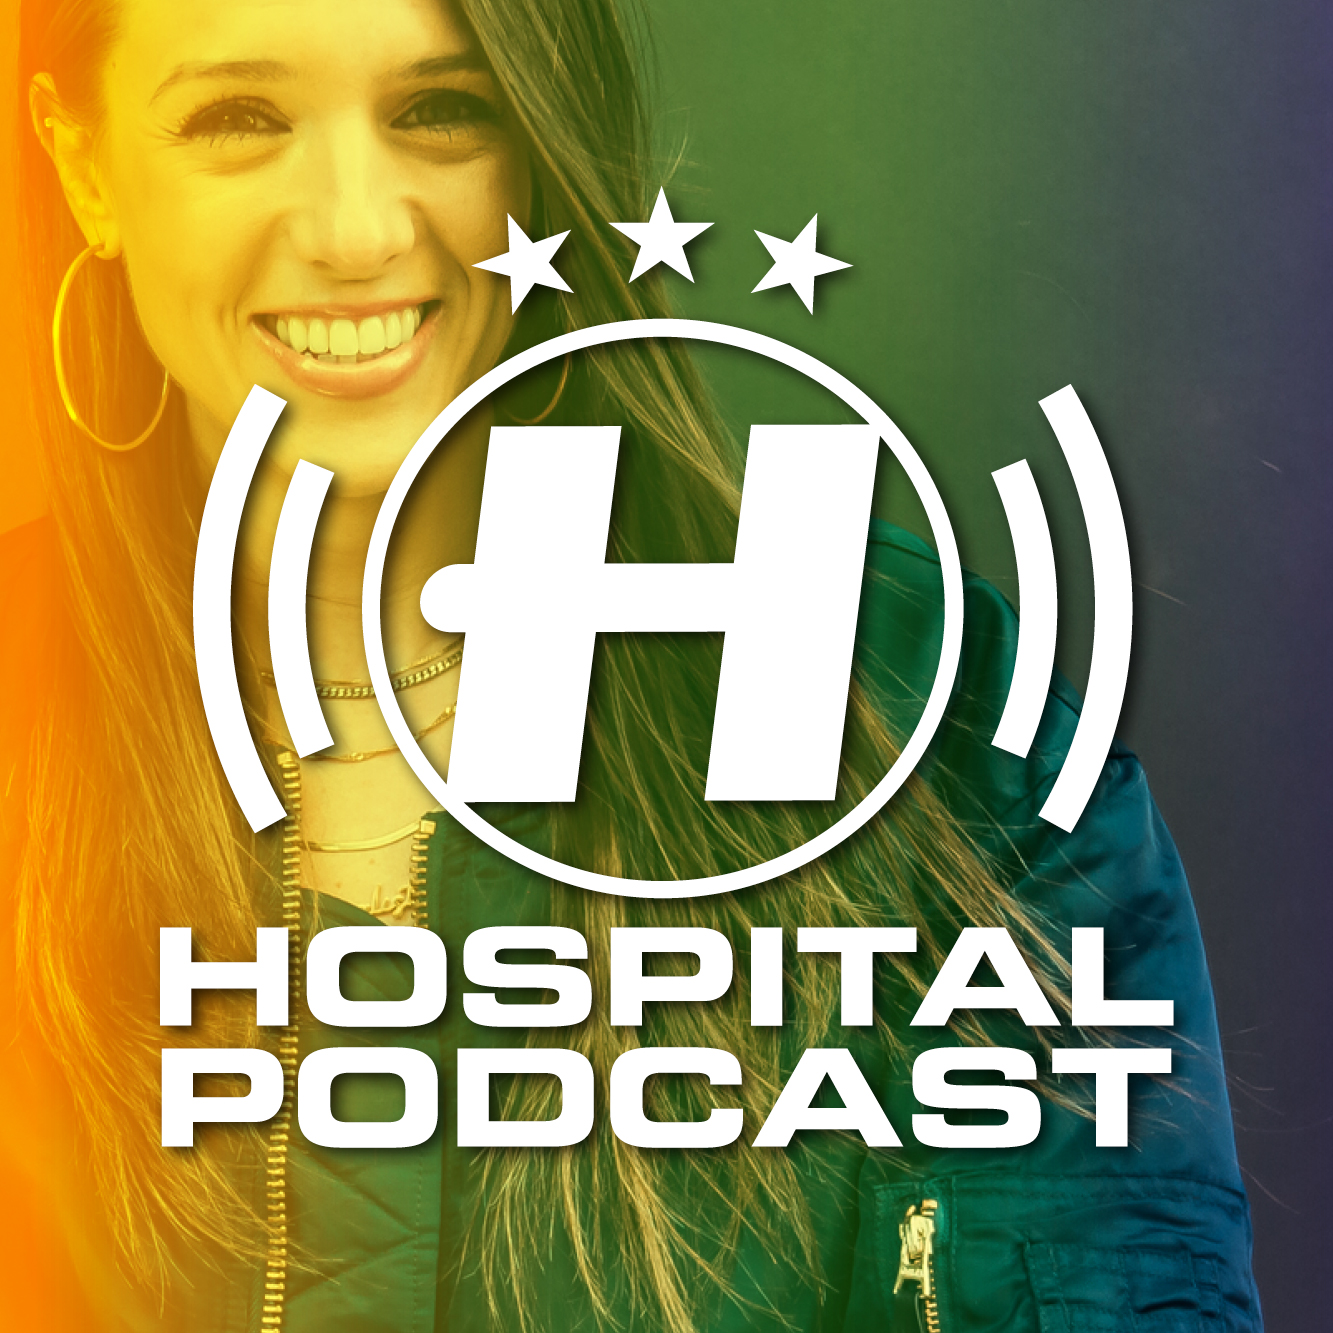 Hospital Podcast 446 with Charlie Tee Artwork